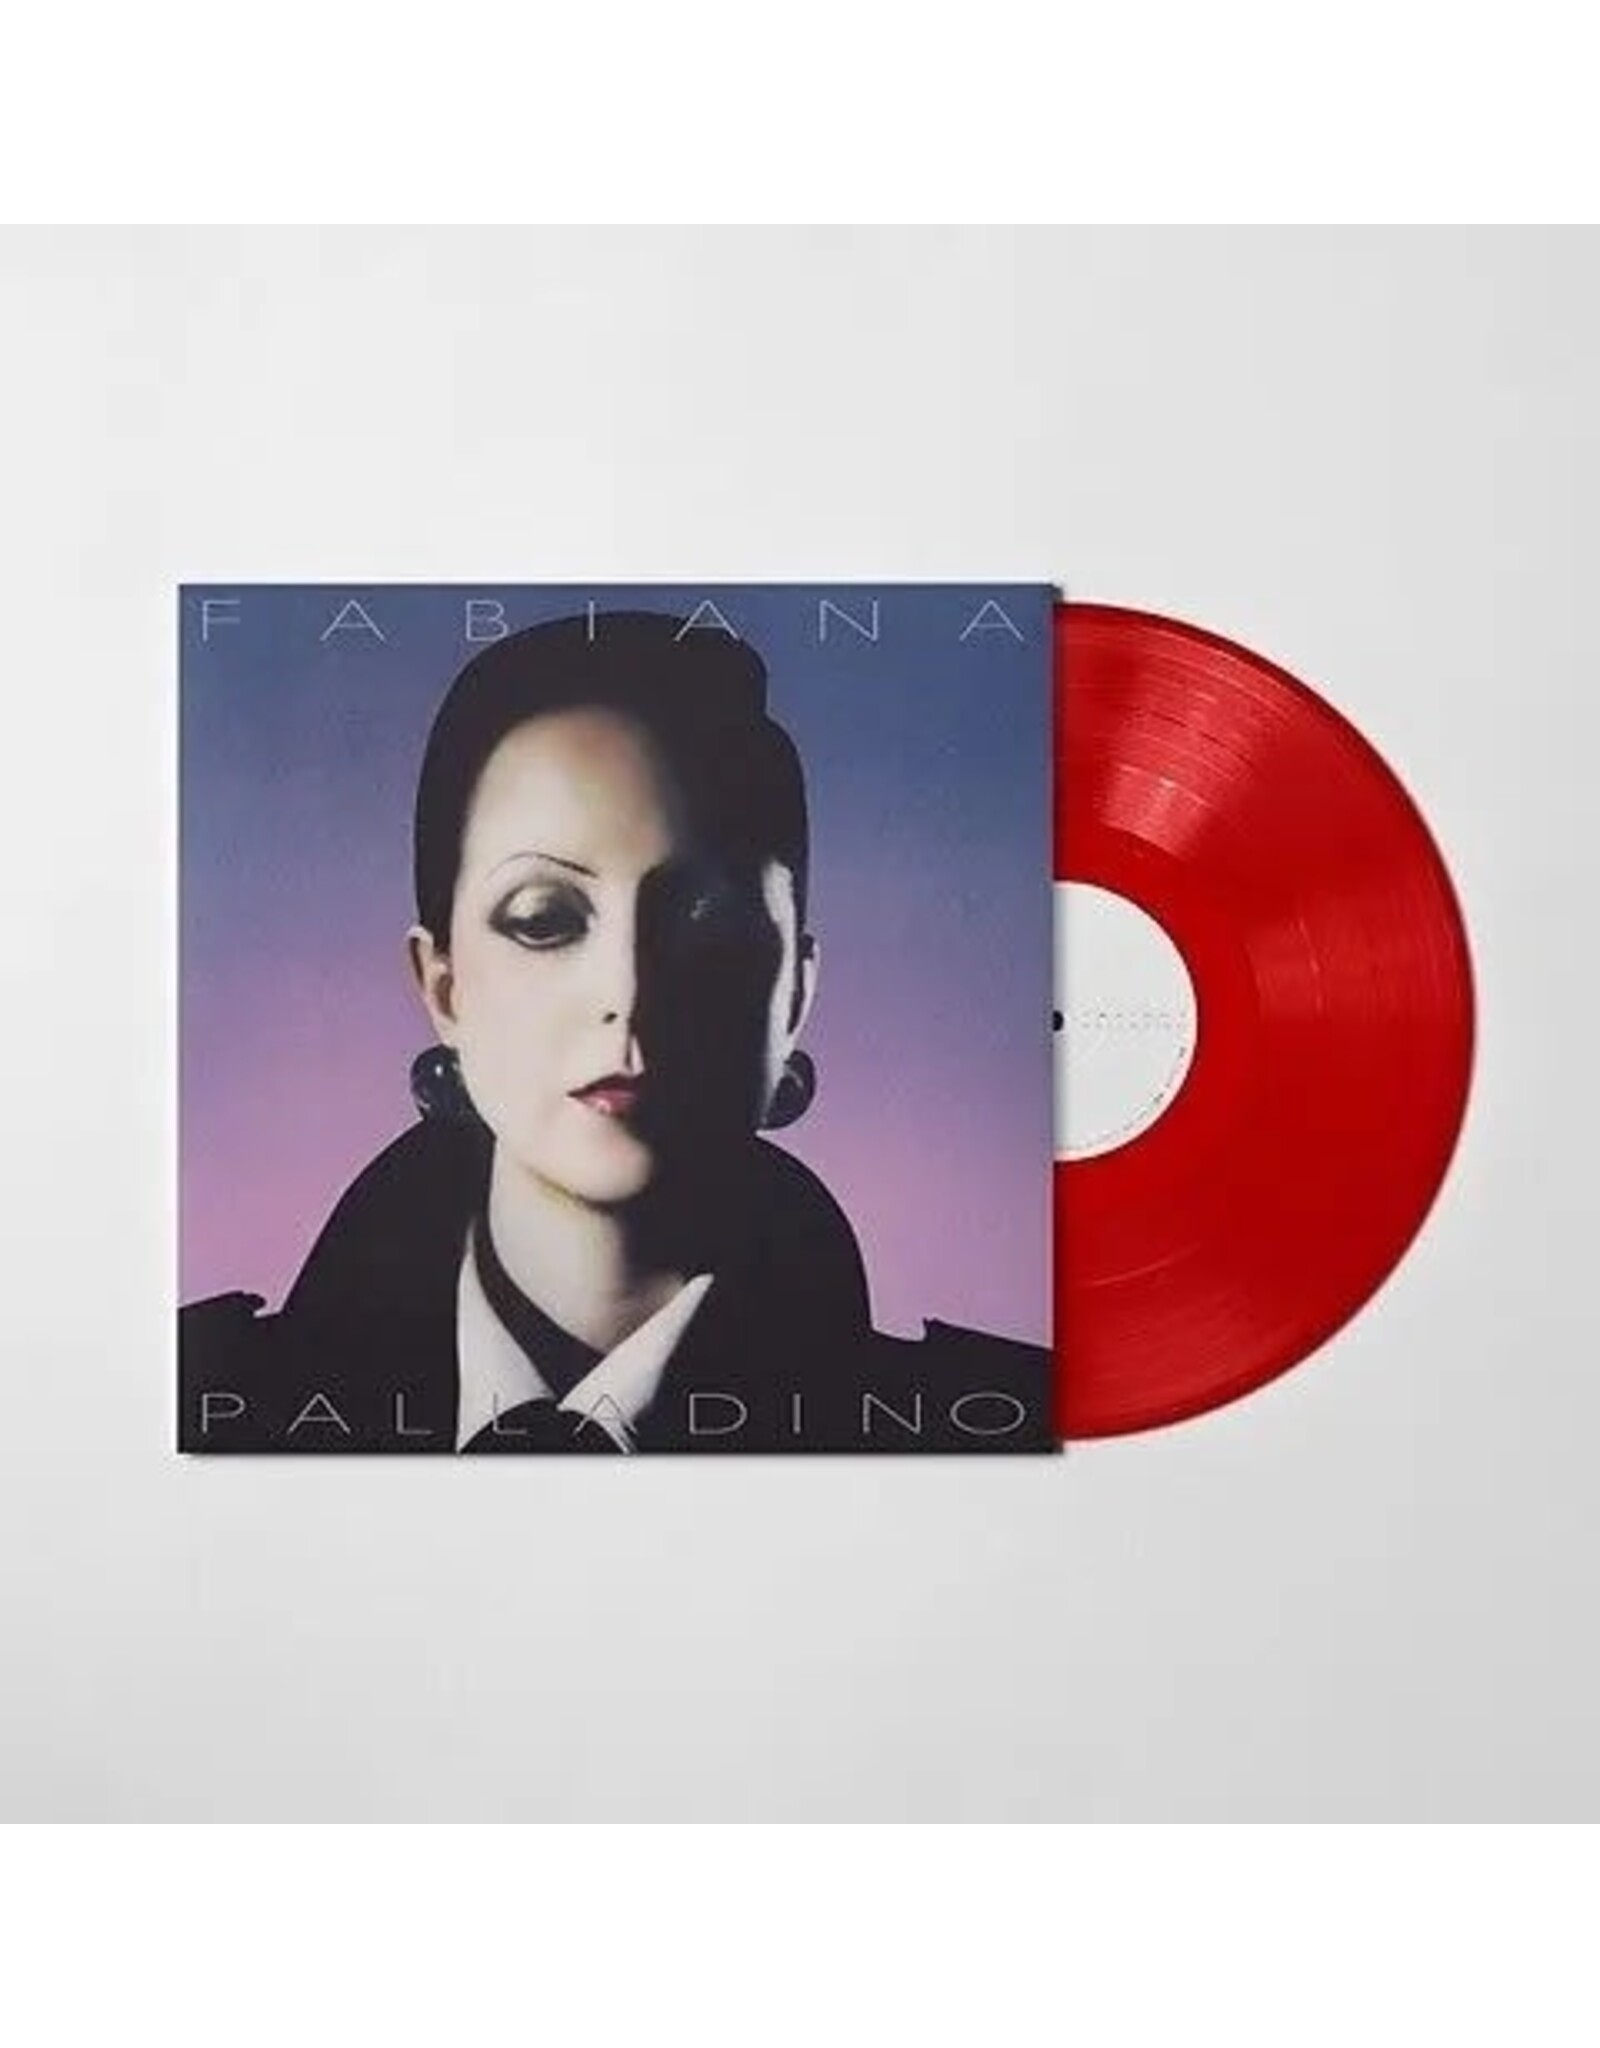 Fabiana Palladino - Fabiana Palladino (Exclusive Red Vinyl)